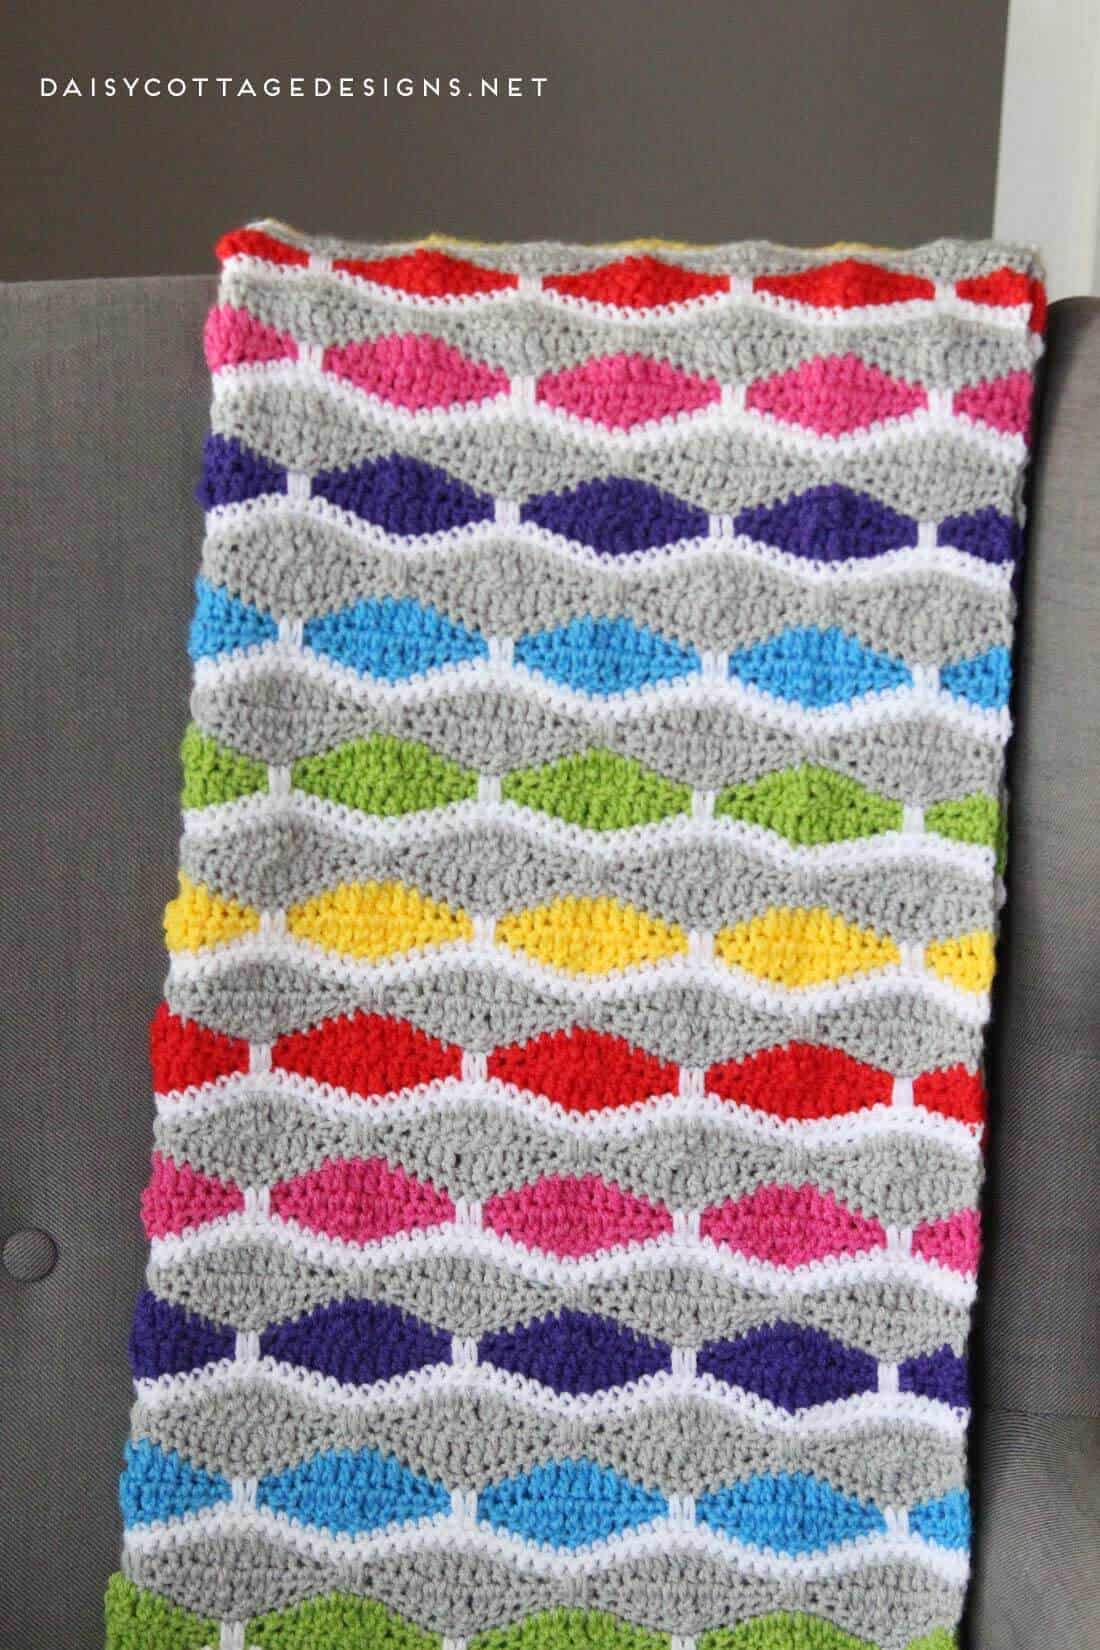 Crochet Blanket Pattern: A Bright &amp; Fun Free Crochet Pattern - Daisy Cottage Designs